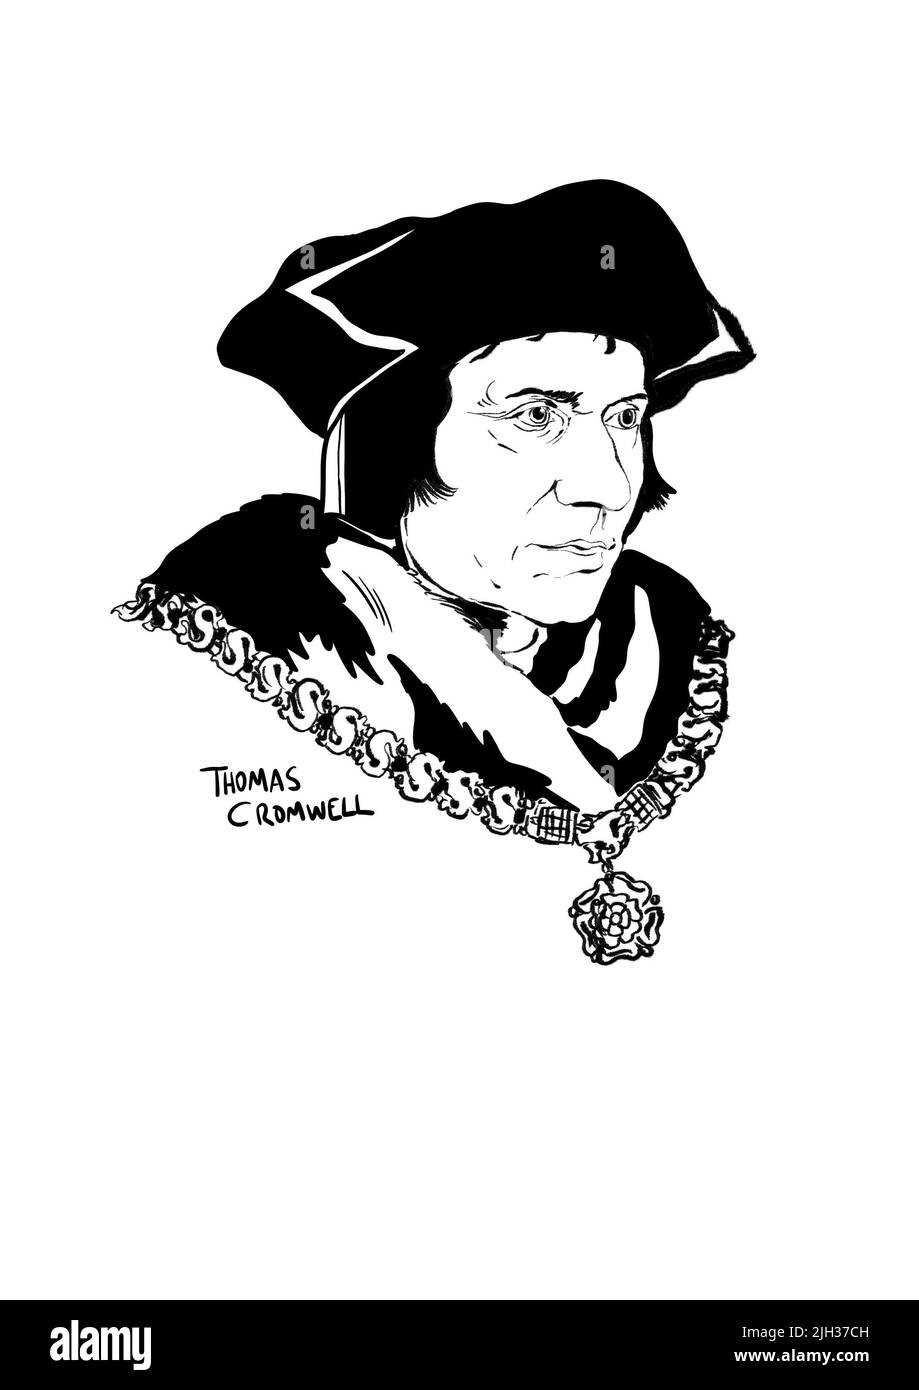 Thomas Cromwell Illustration Stock Photo